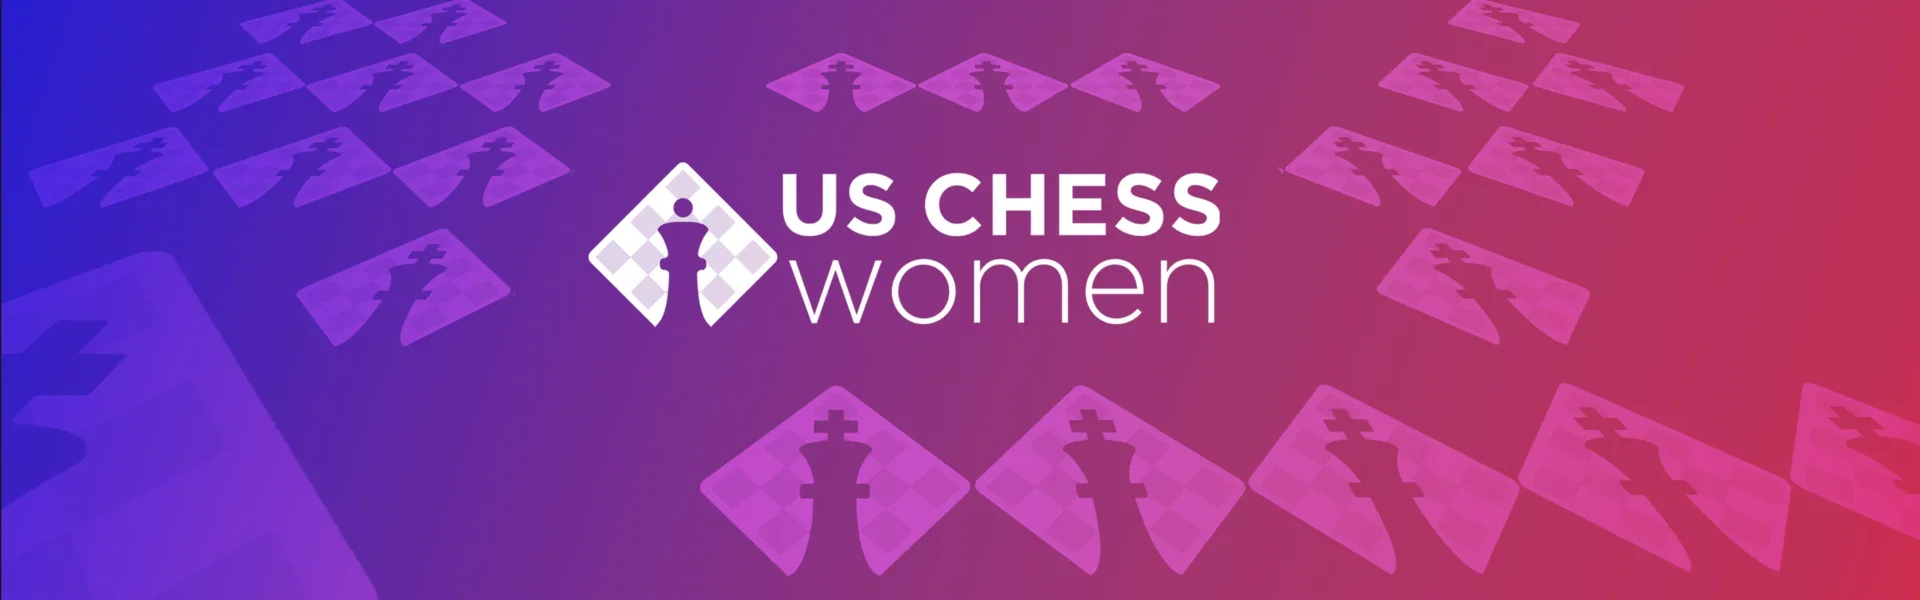 us chess women banner